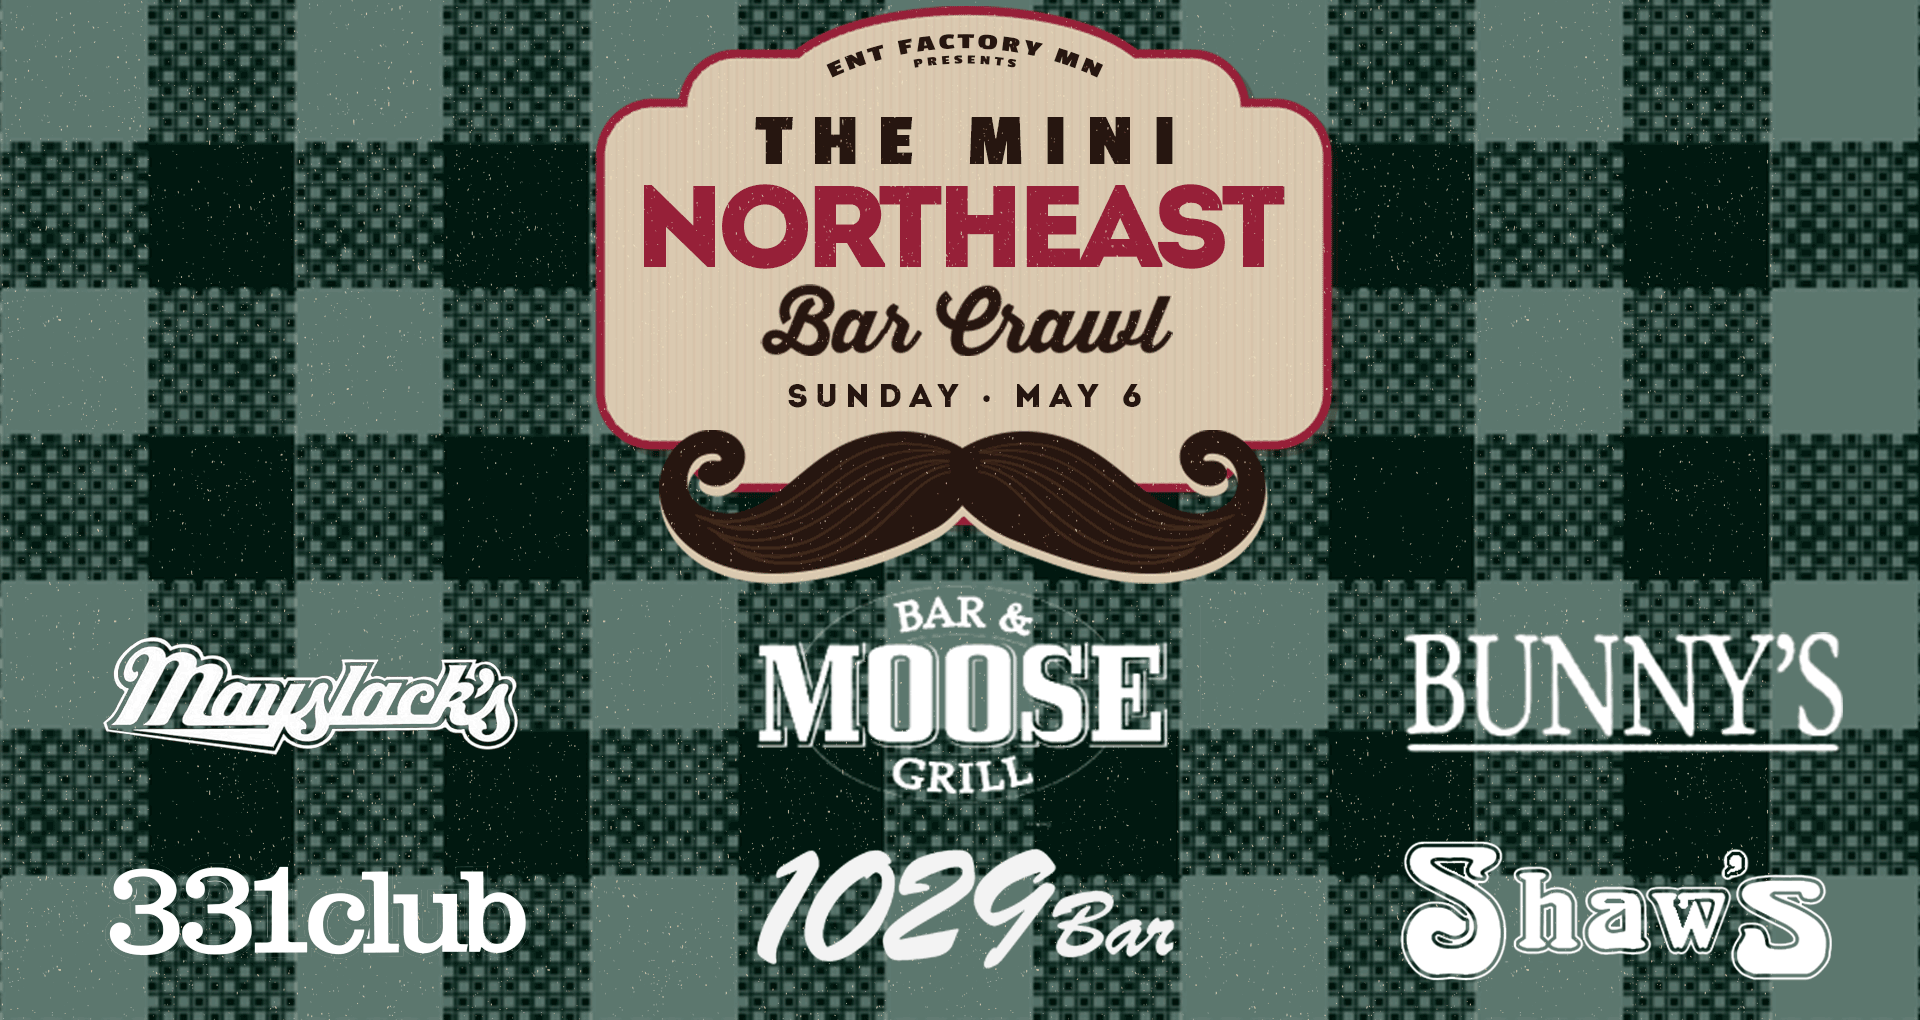 The Mini Northeast Bar Crawl